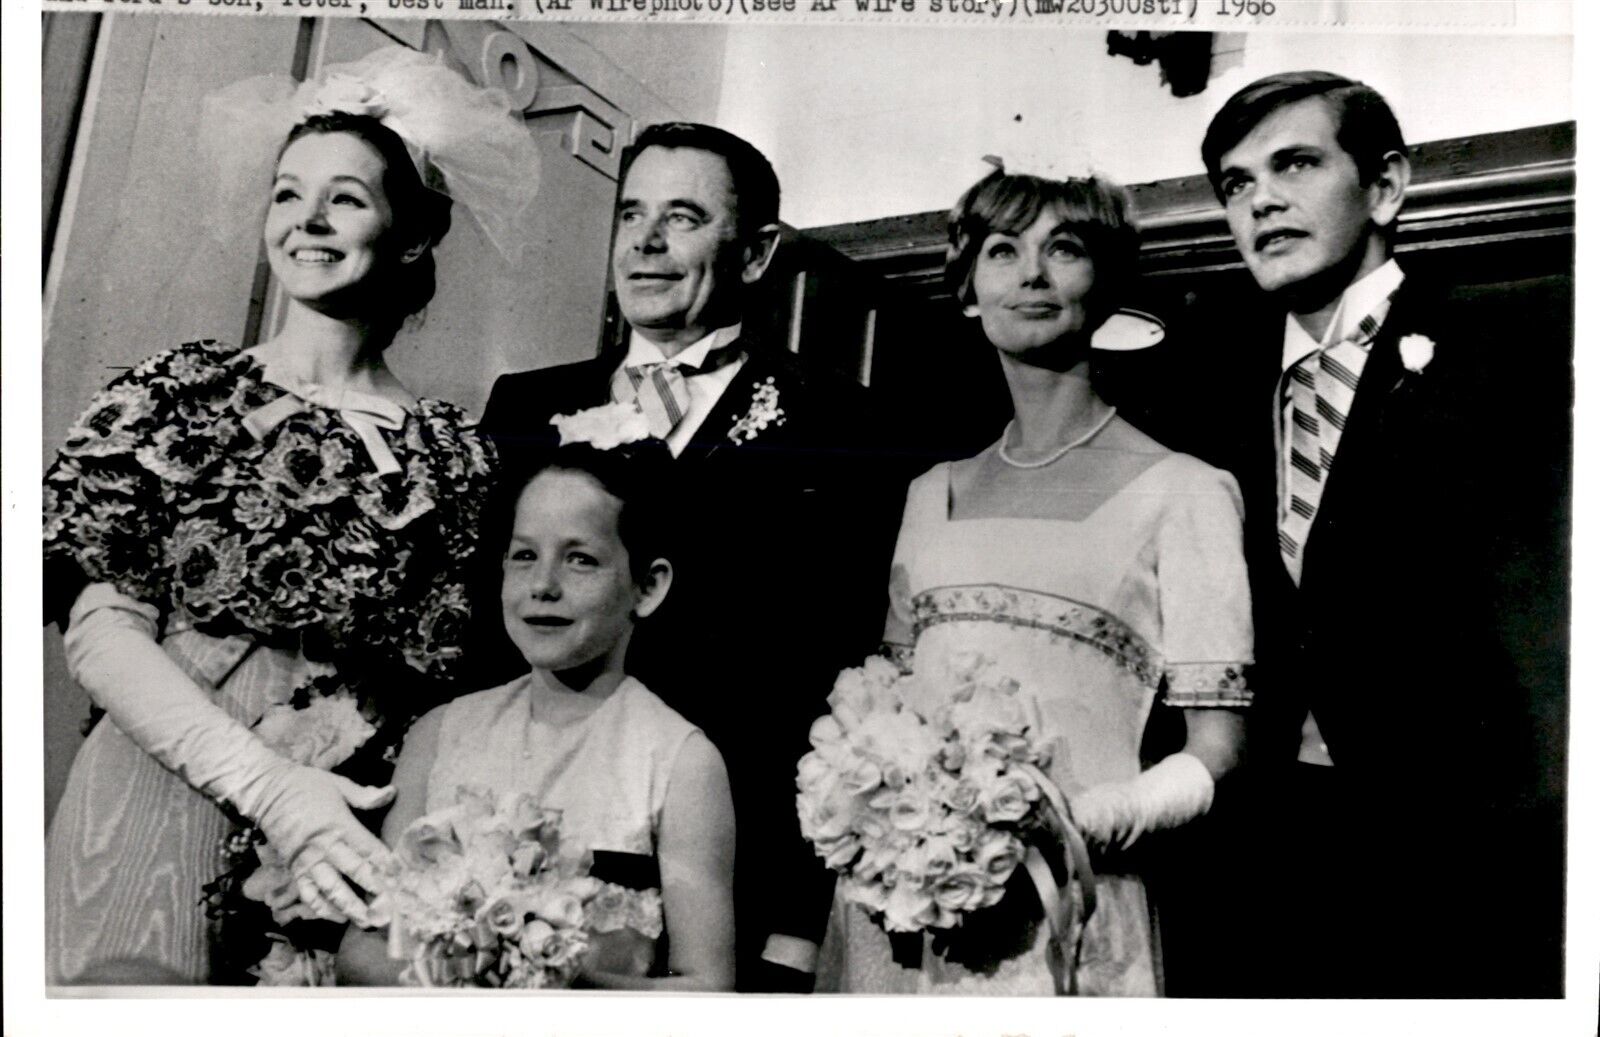 LG44 1966 AP Wire Photo GLENN FORD & BRIDE KATHY HAYS WEDDING FAMILY PORTRAIT